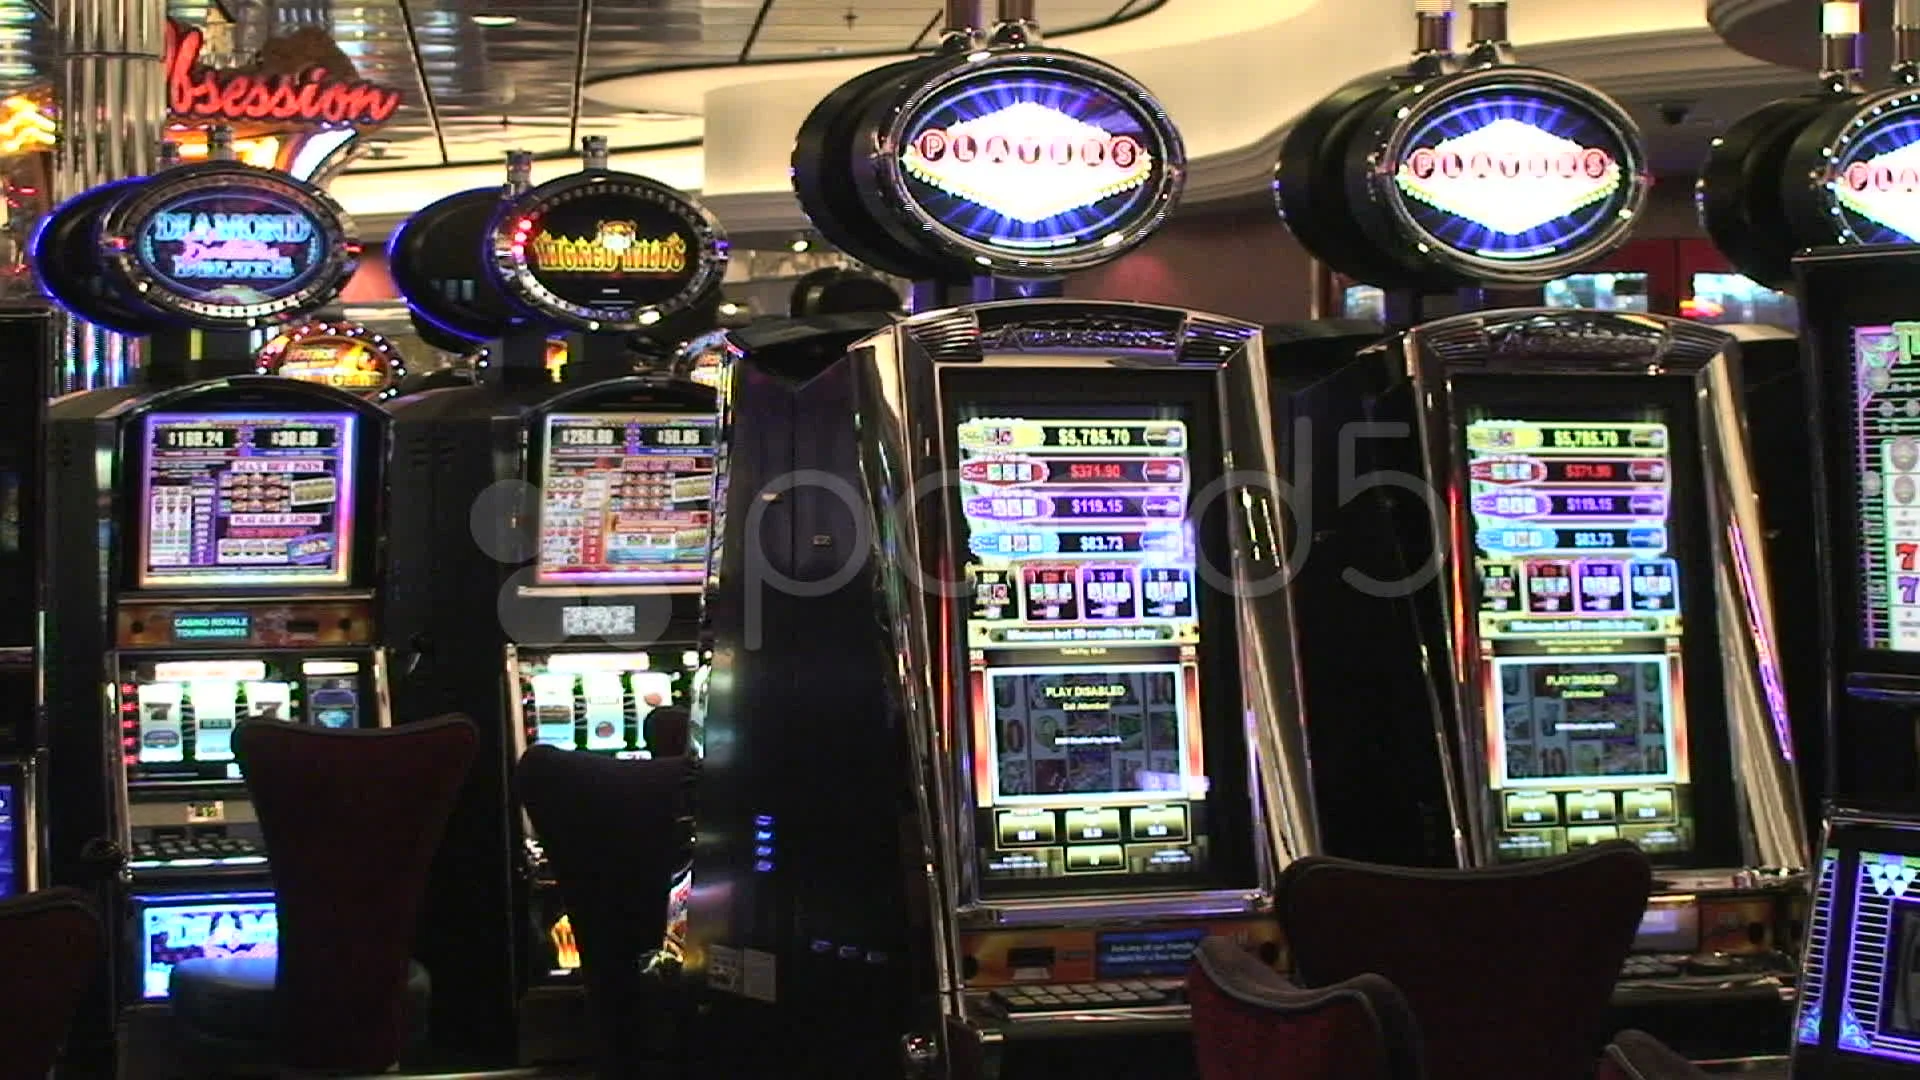 Moonwalker Slot Machine